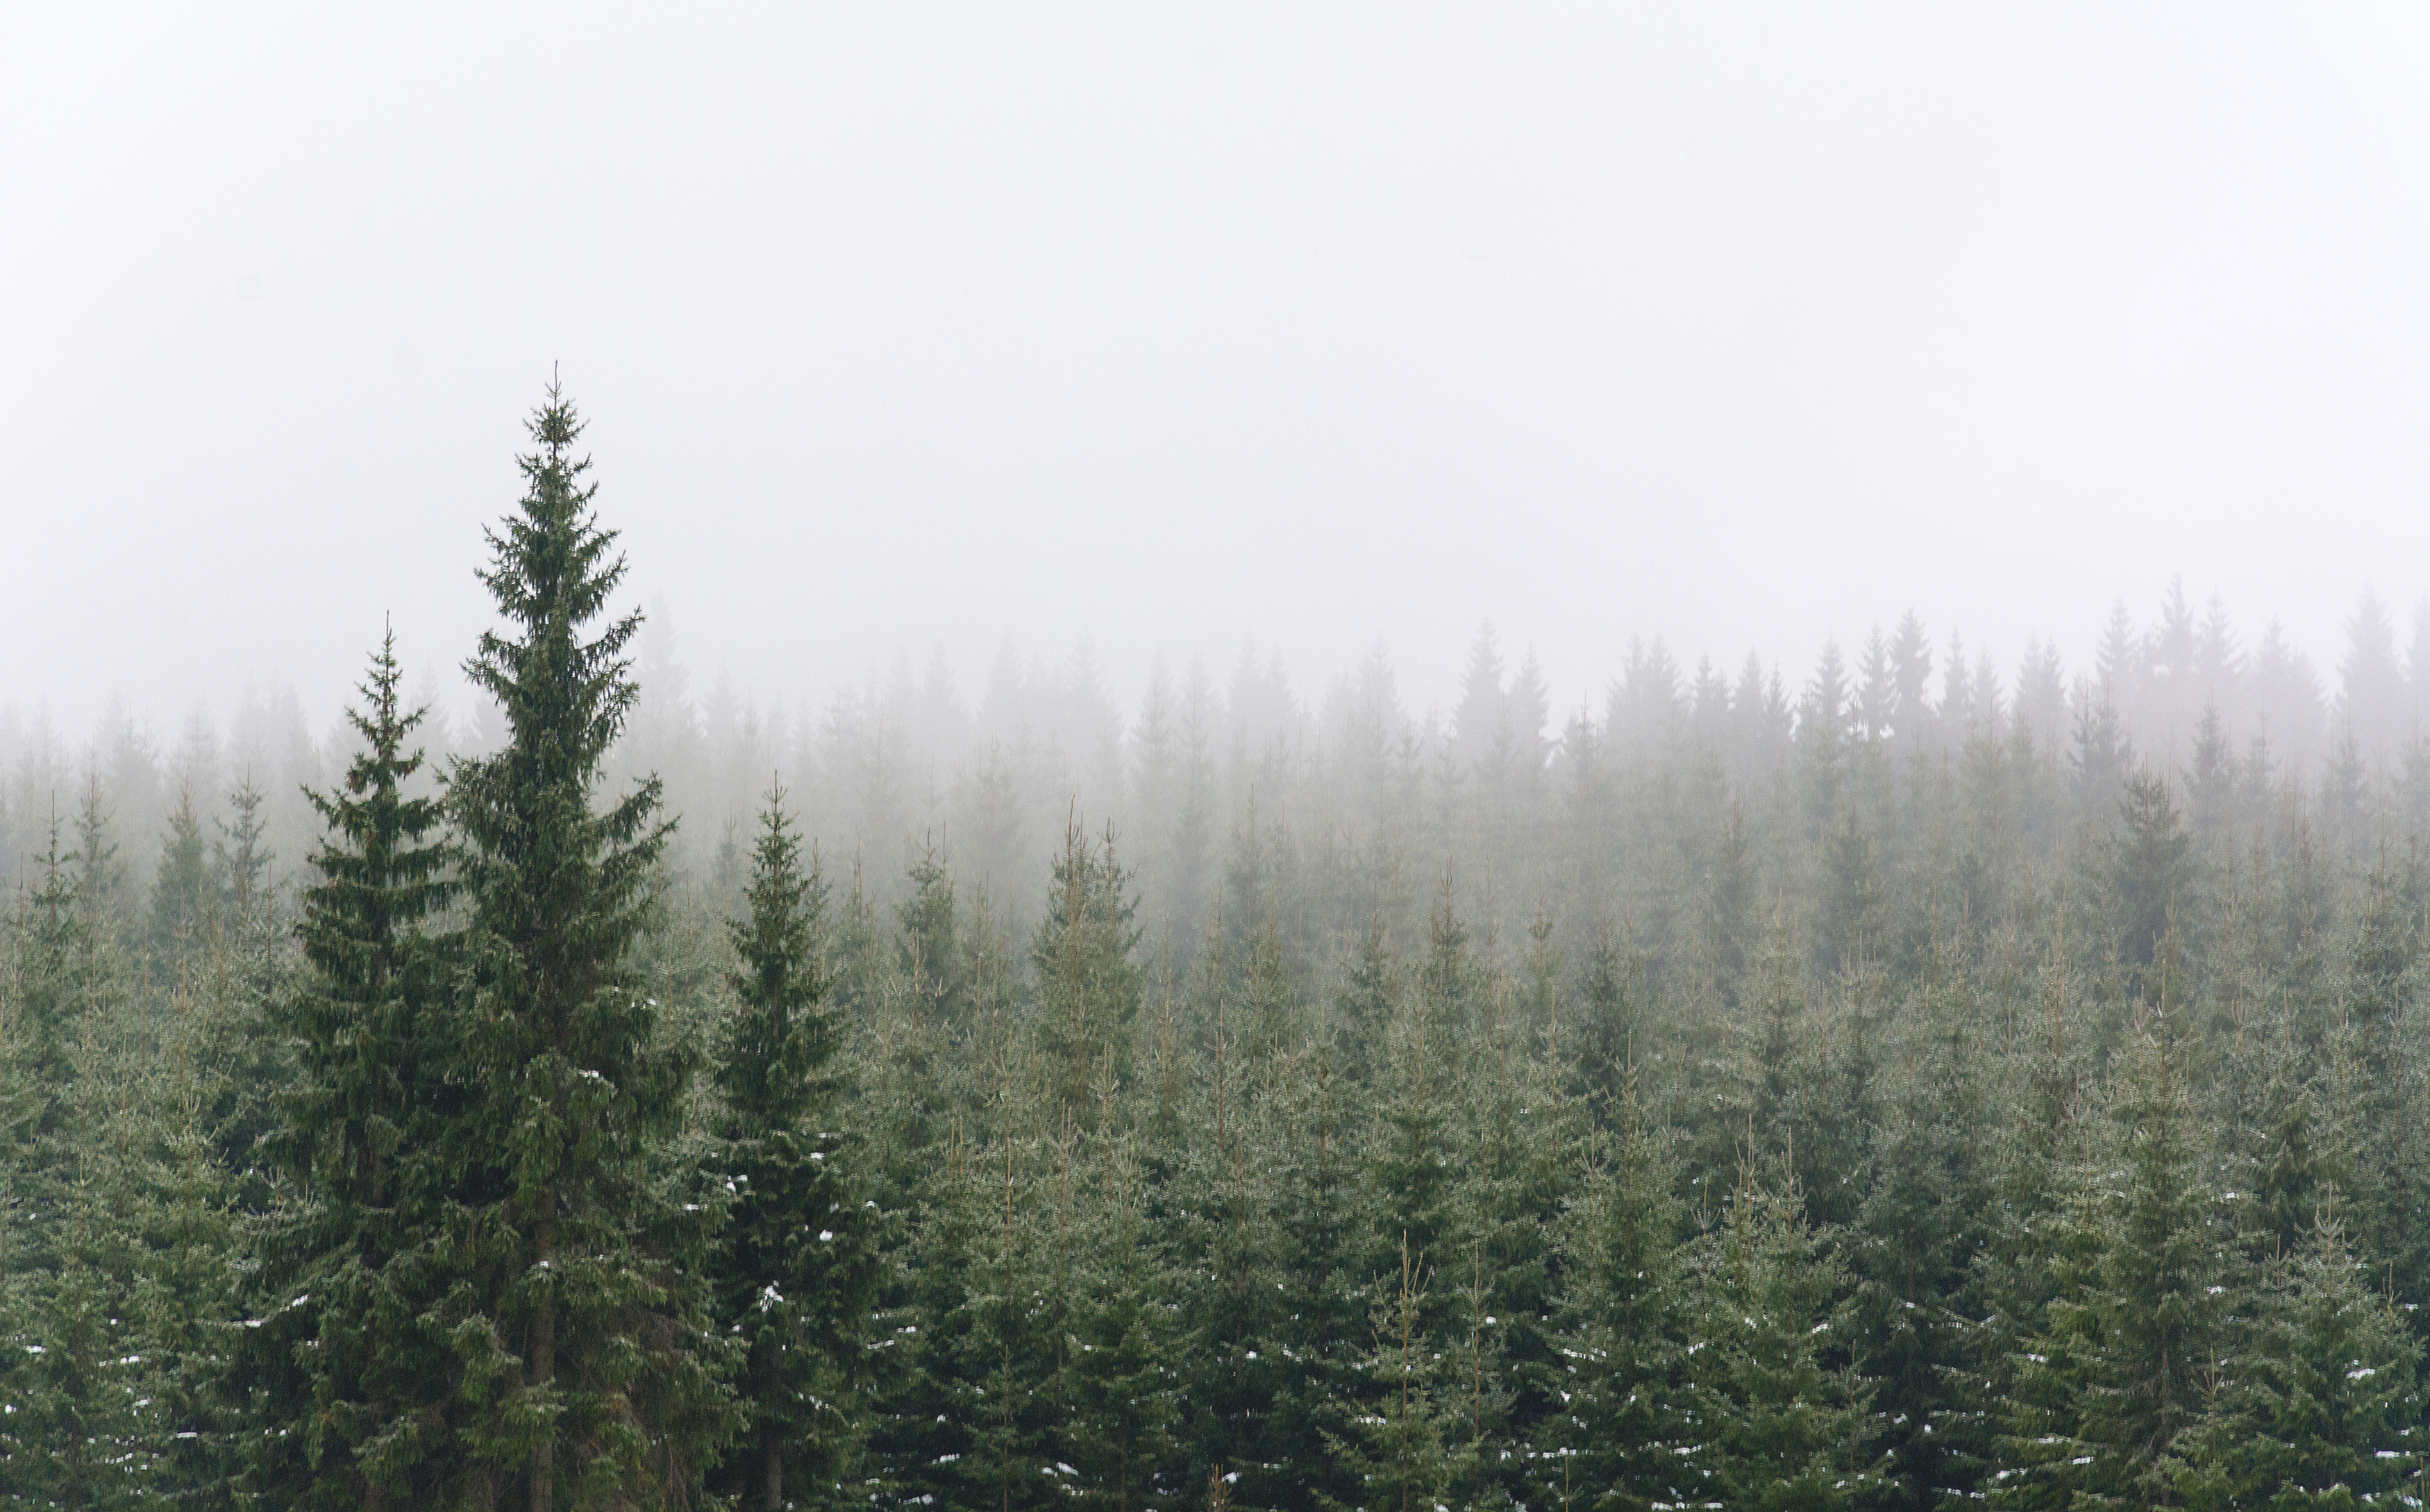 Free Image: Winter Forest | Libreshot Public Domain Photos